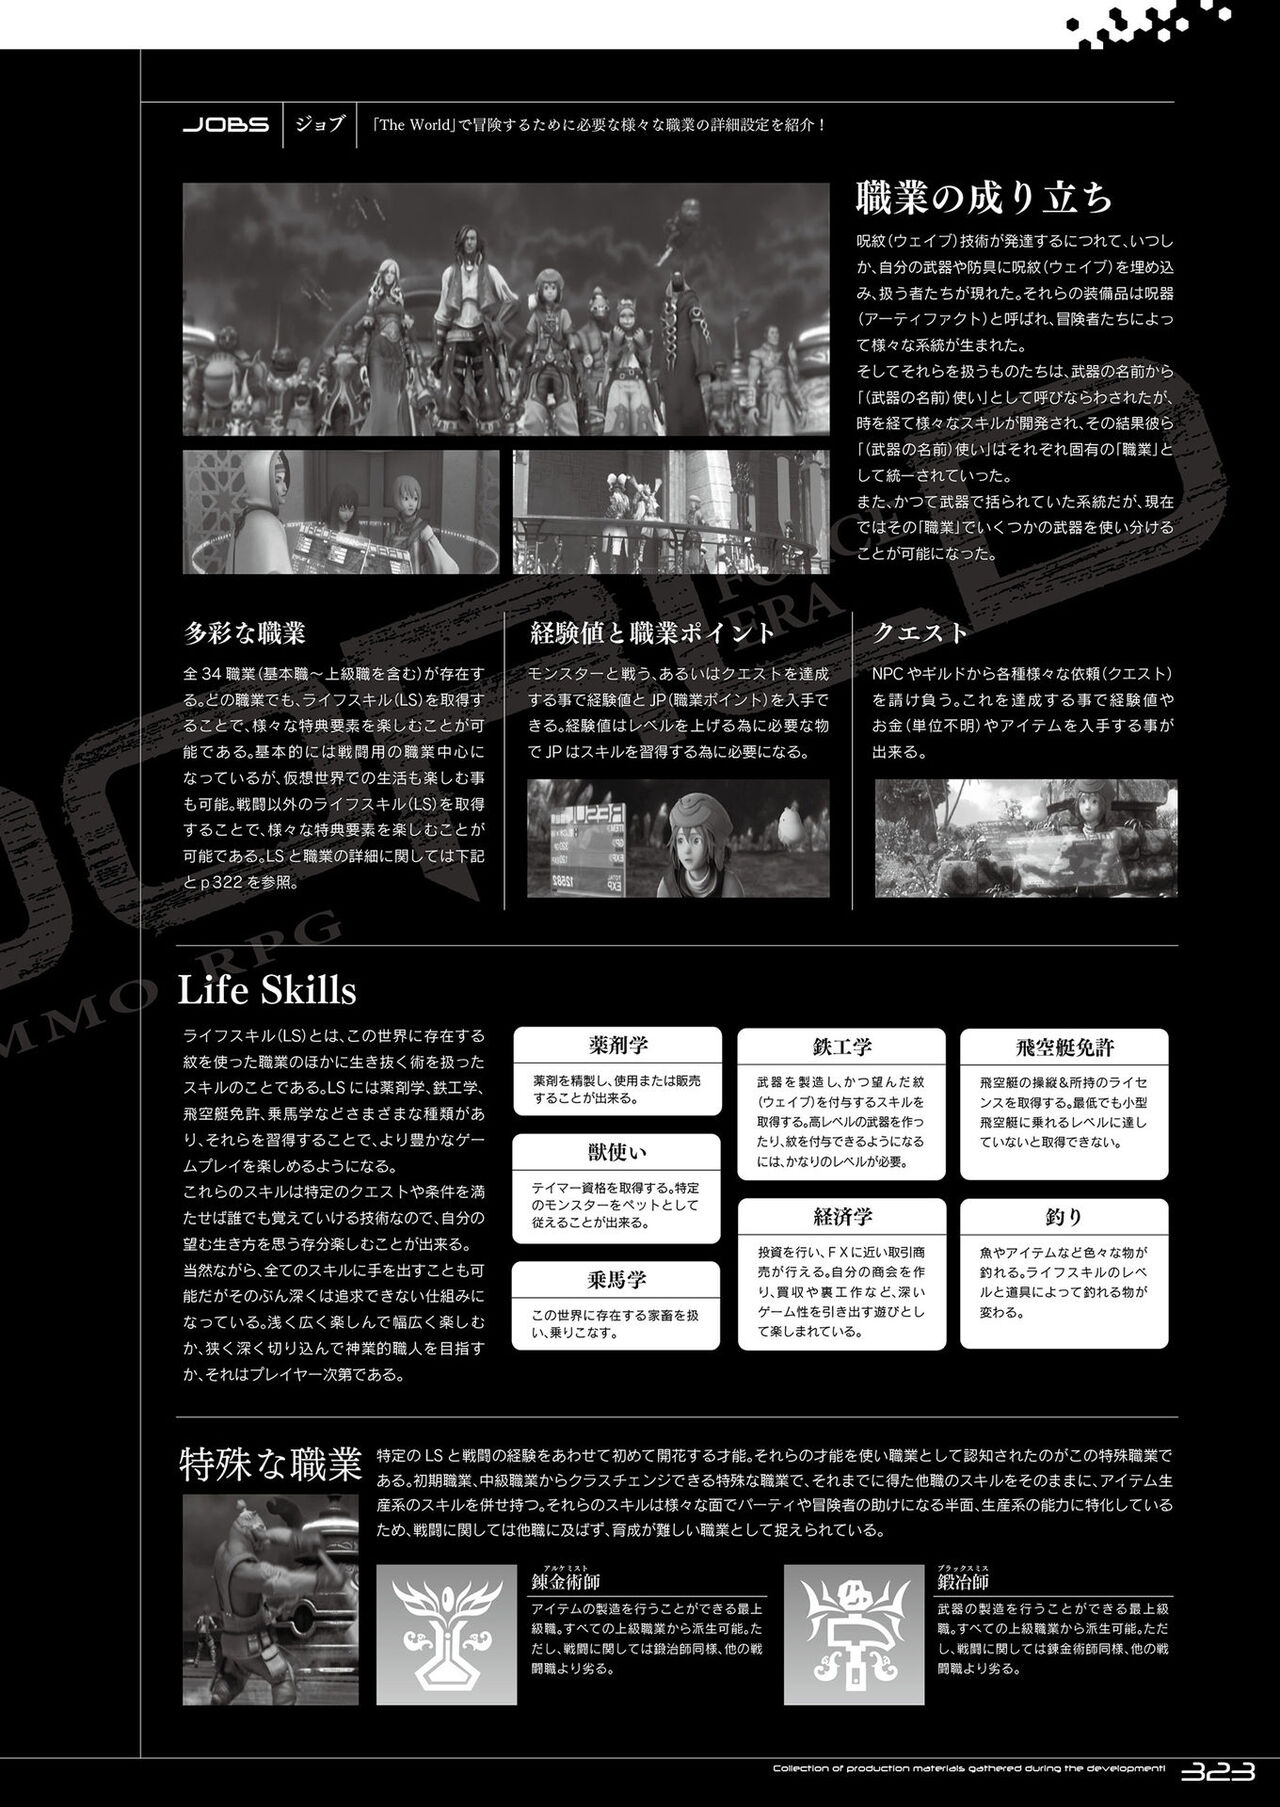 Dot Hack Sekai-no Muko ni  +Versus Complete Set  Documentation .hack //Archives _ 05 325